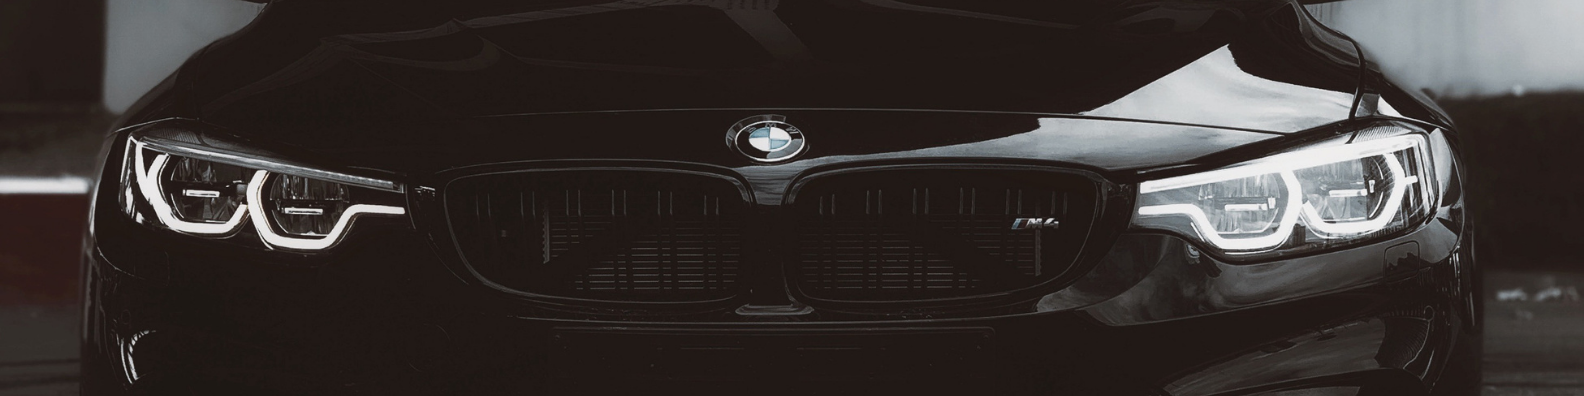 BMW hood view